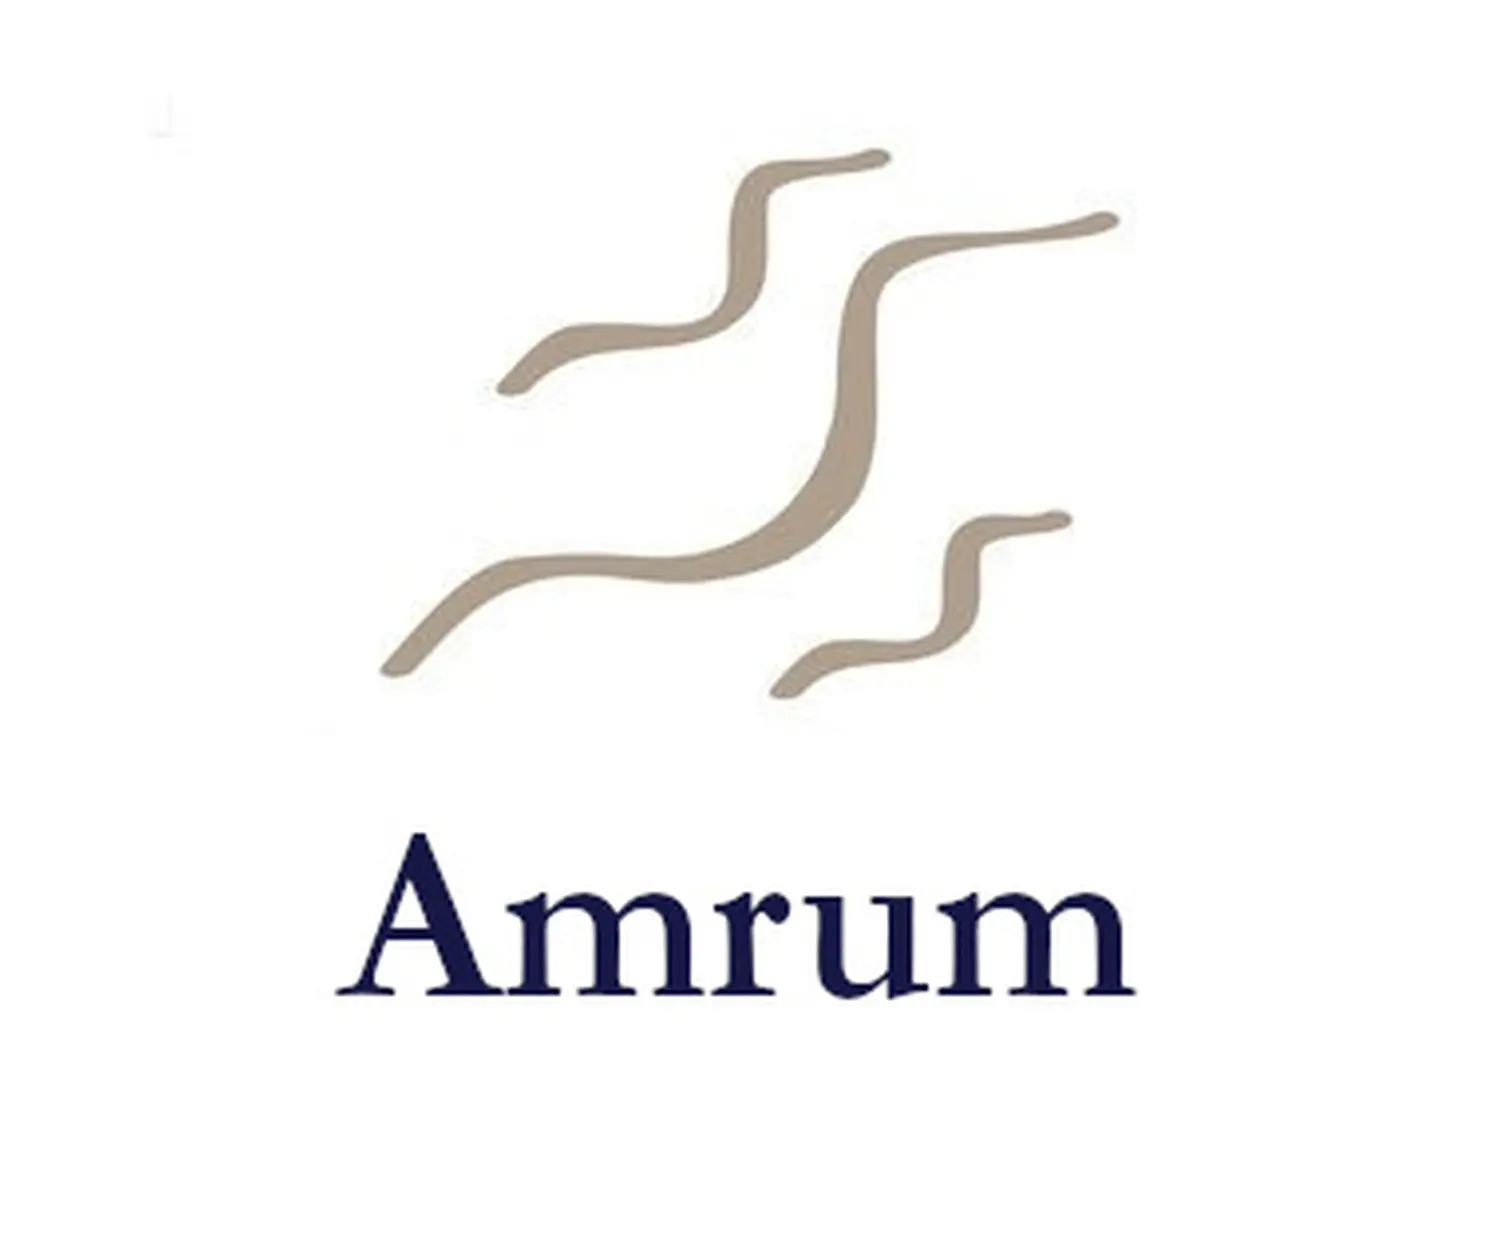 Amrum logo